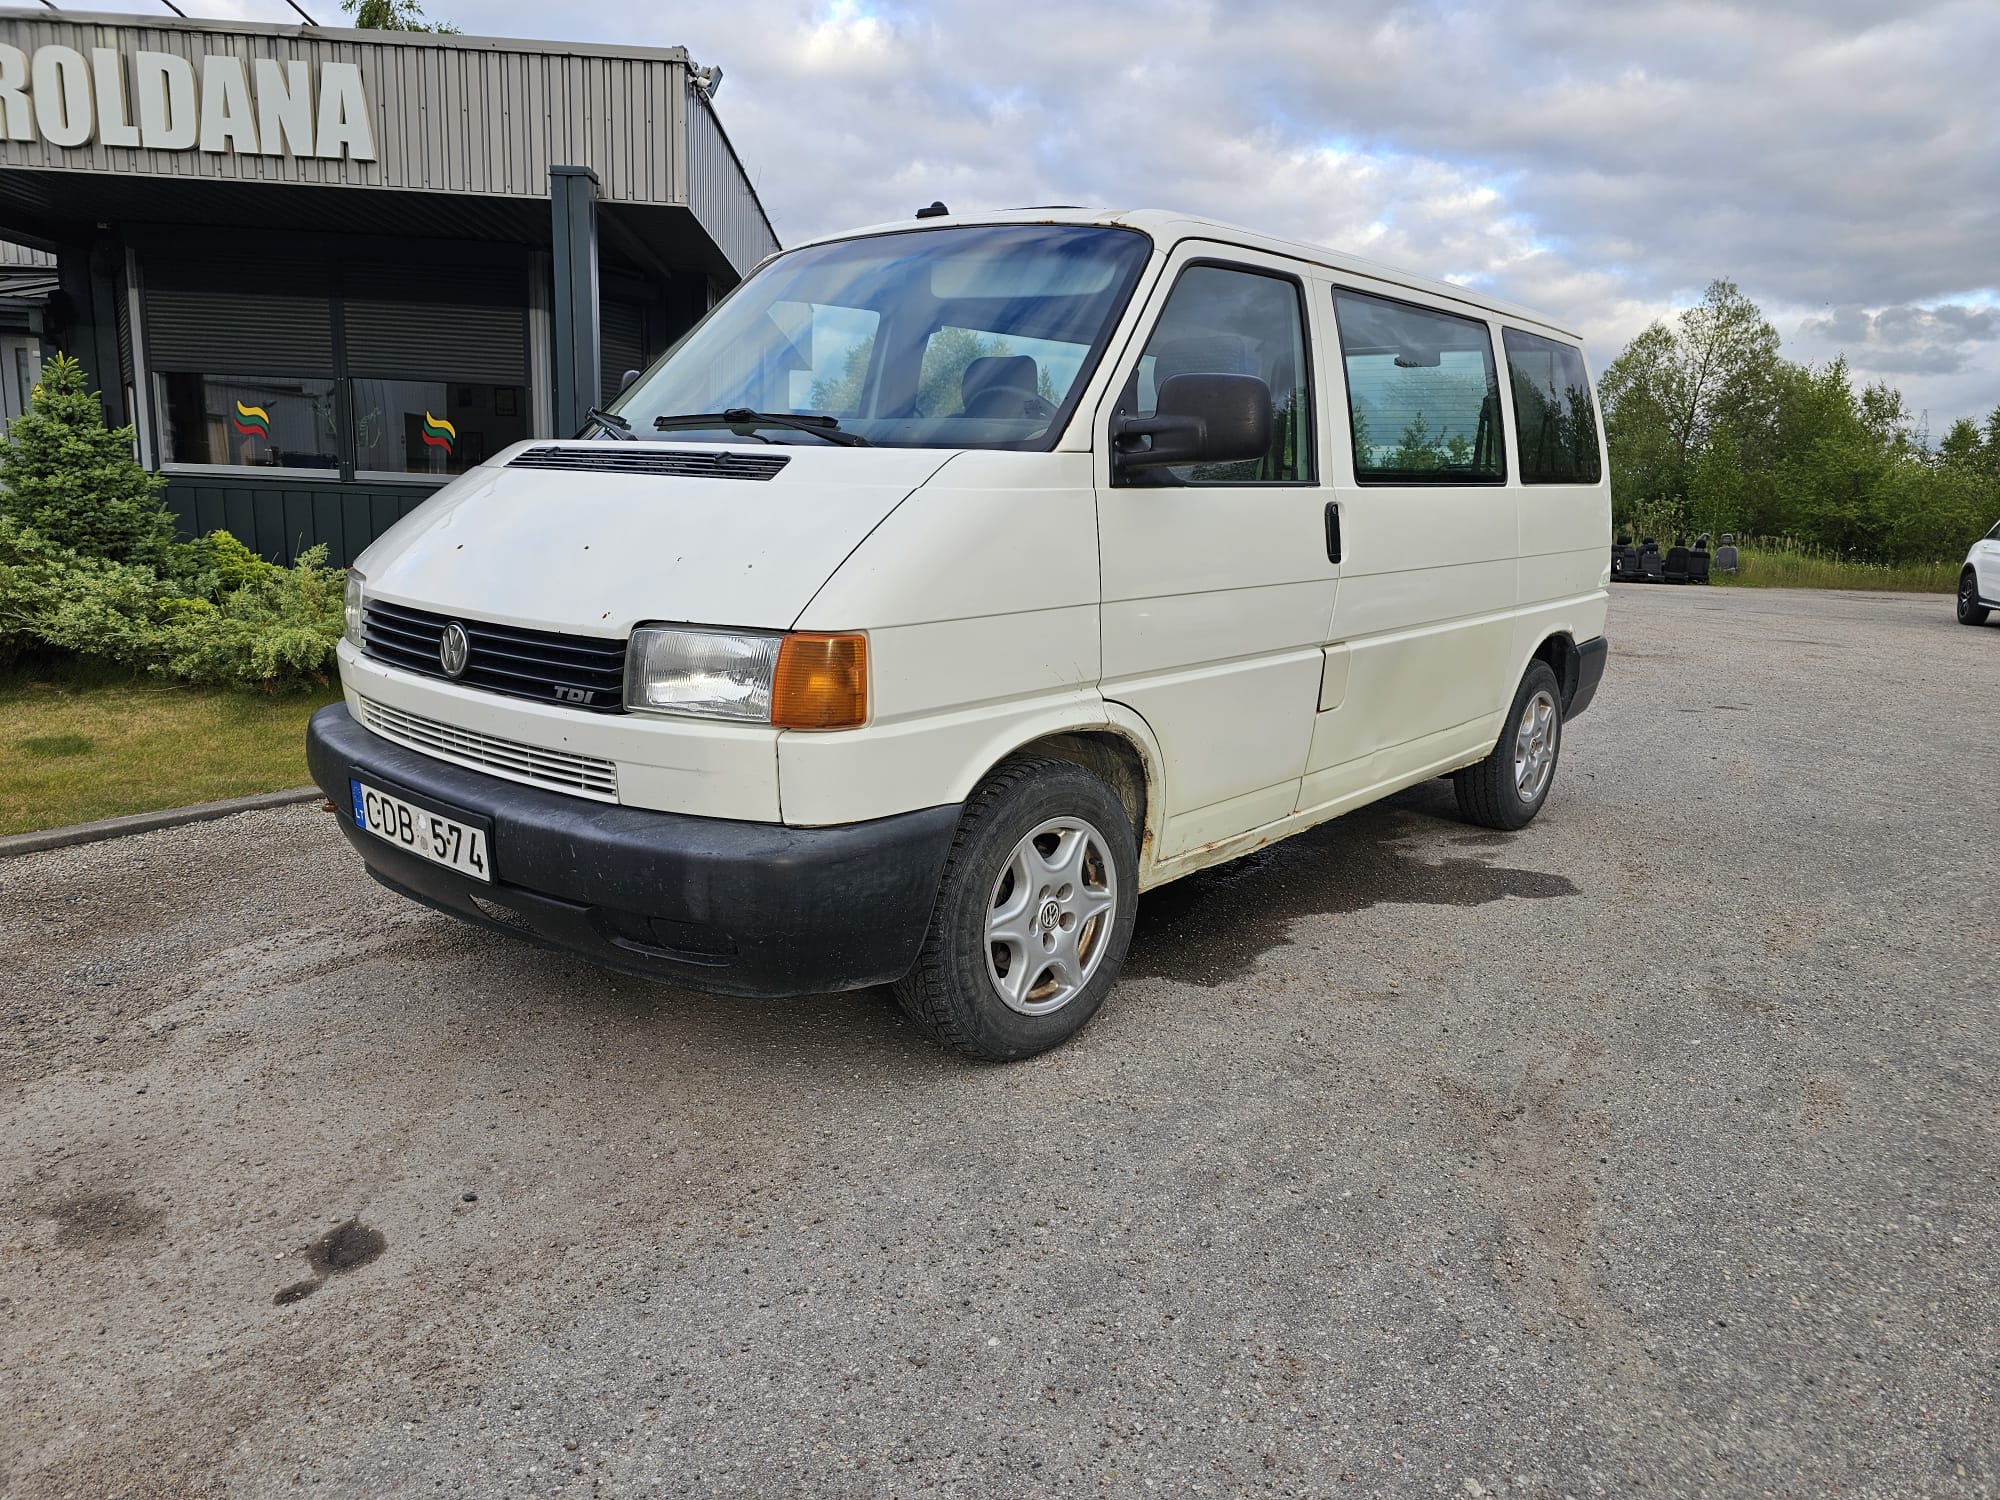 Volkswagen Transporter, 2.5 l., passenger minibus, 2000/naudoti automobiliai/Roldana